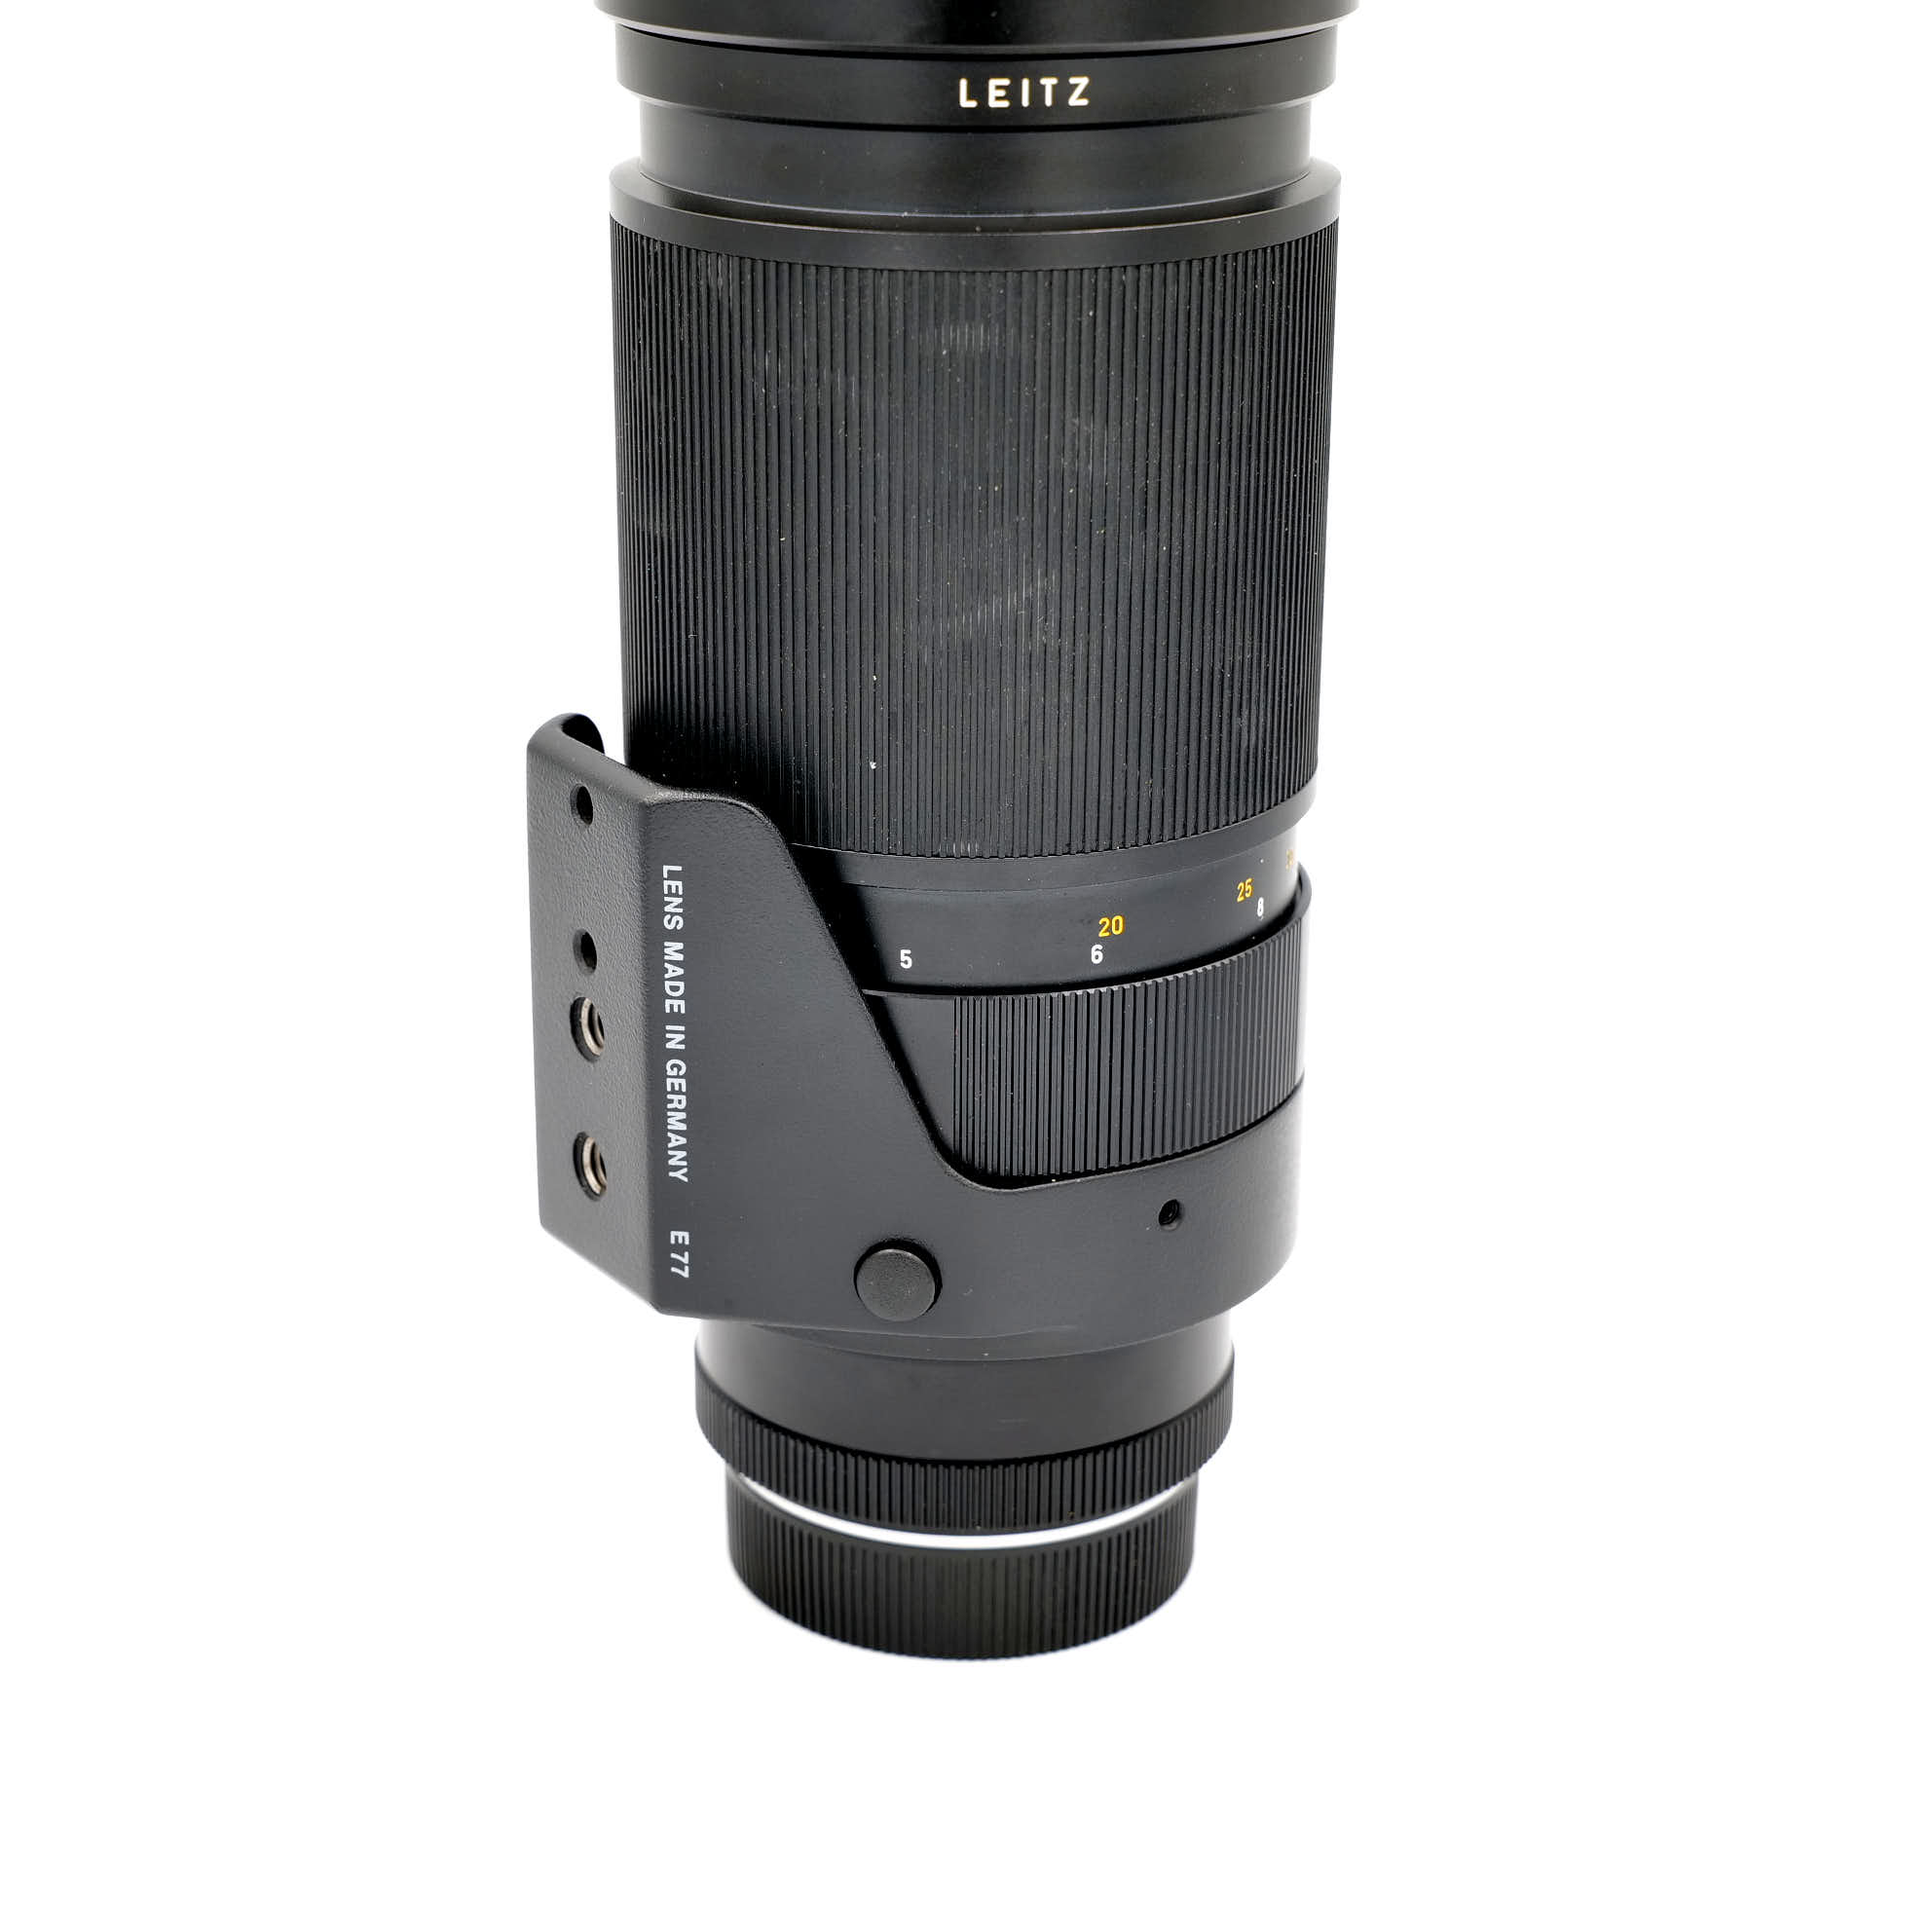 Leica Telyt-R 350mm f/4.8 11915 | Leica Camera Classic